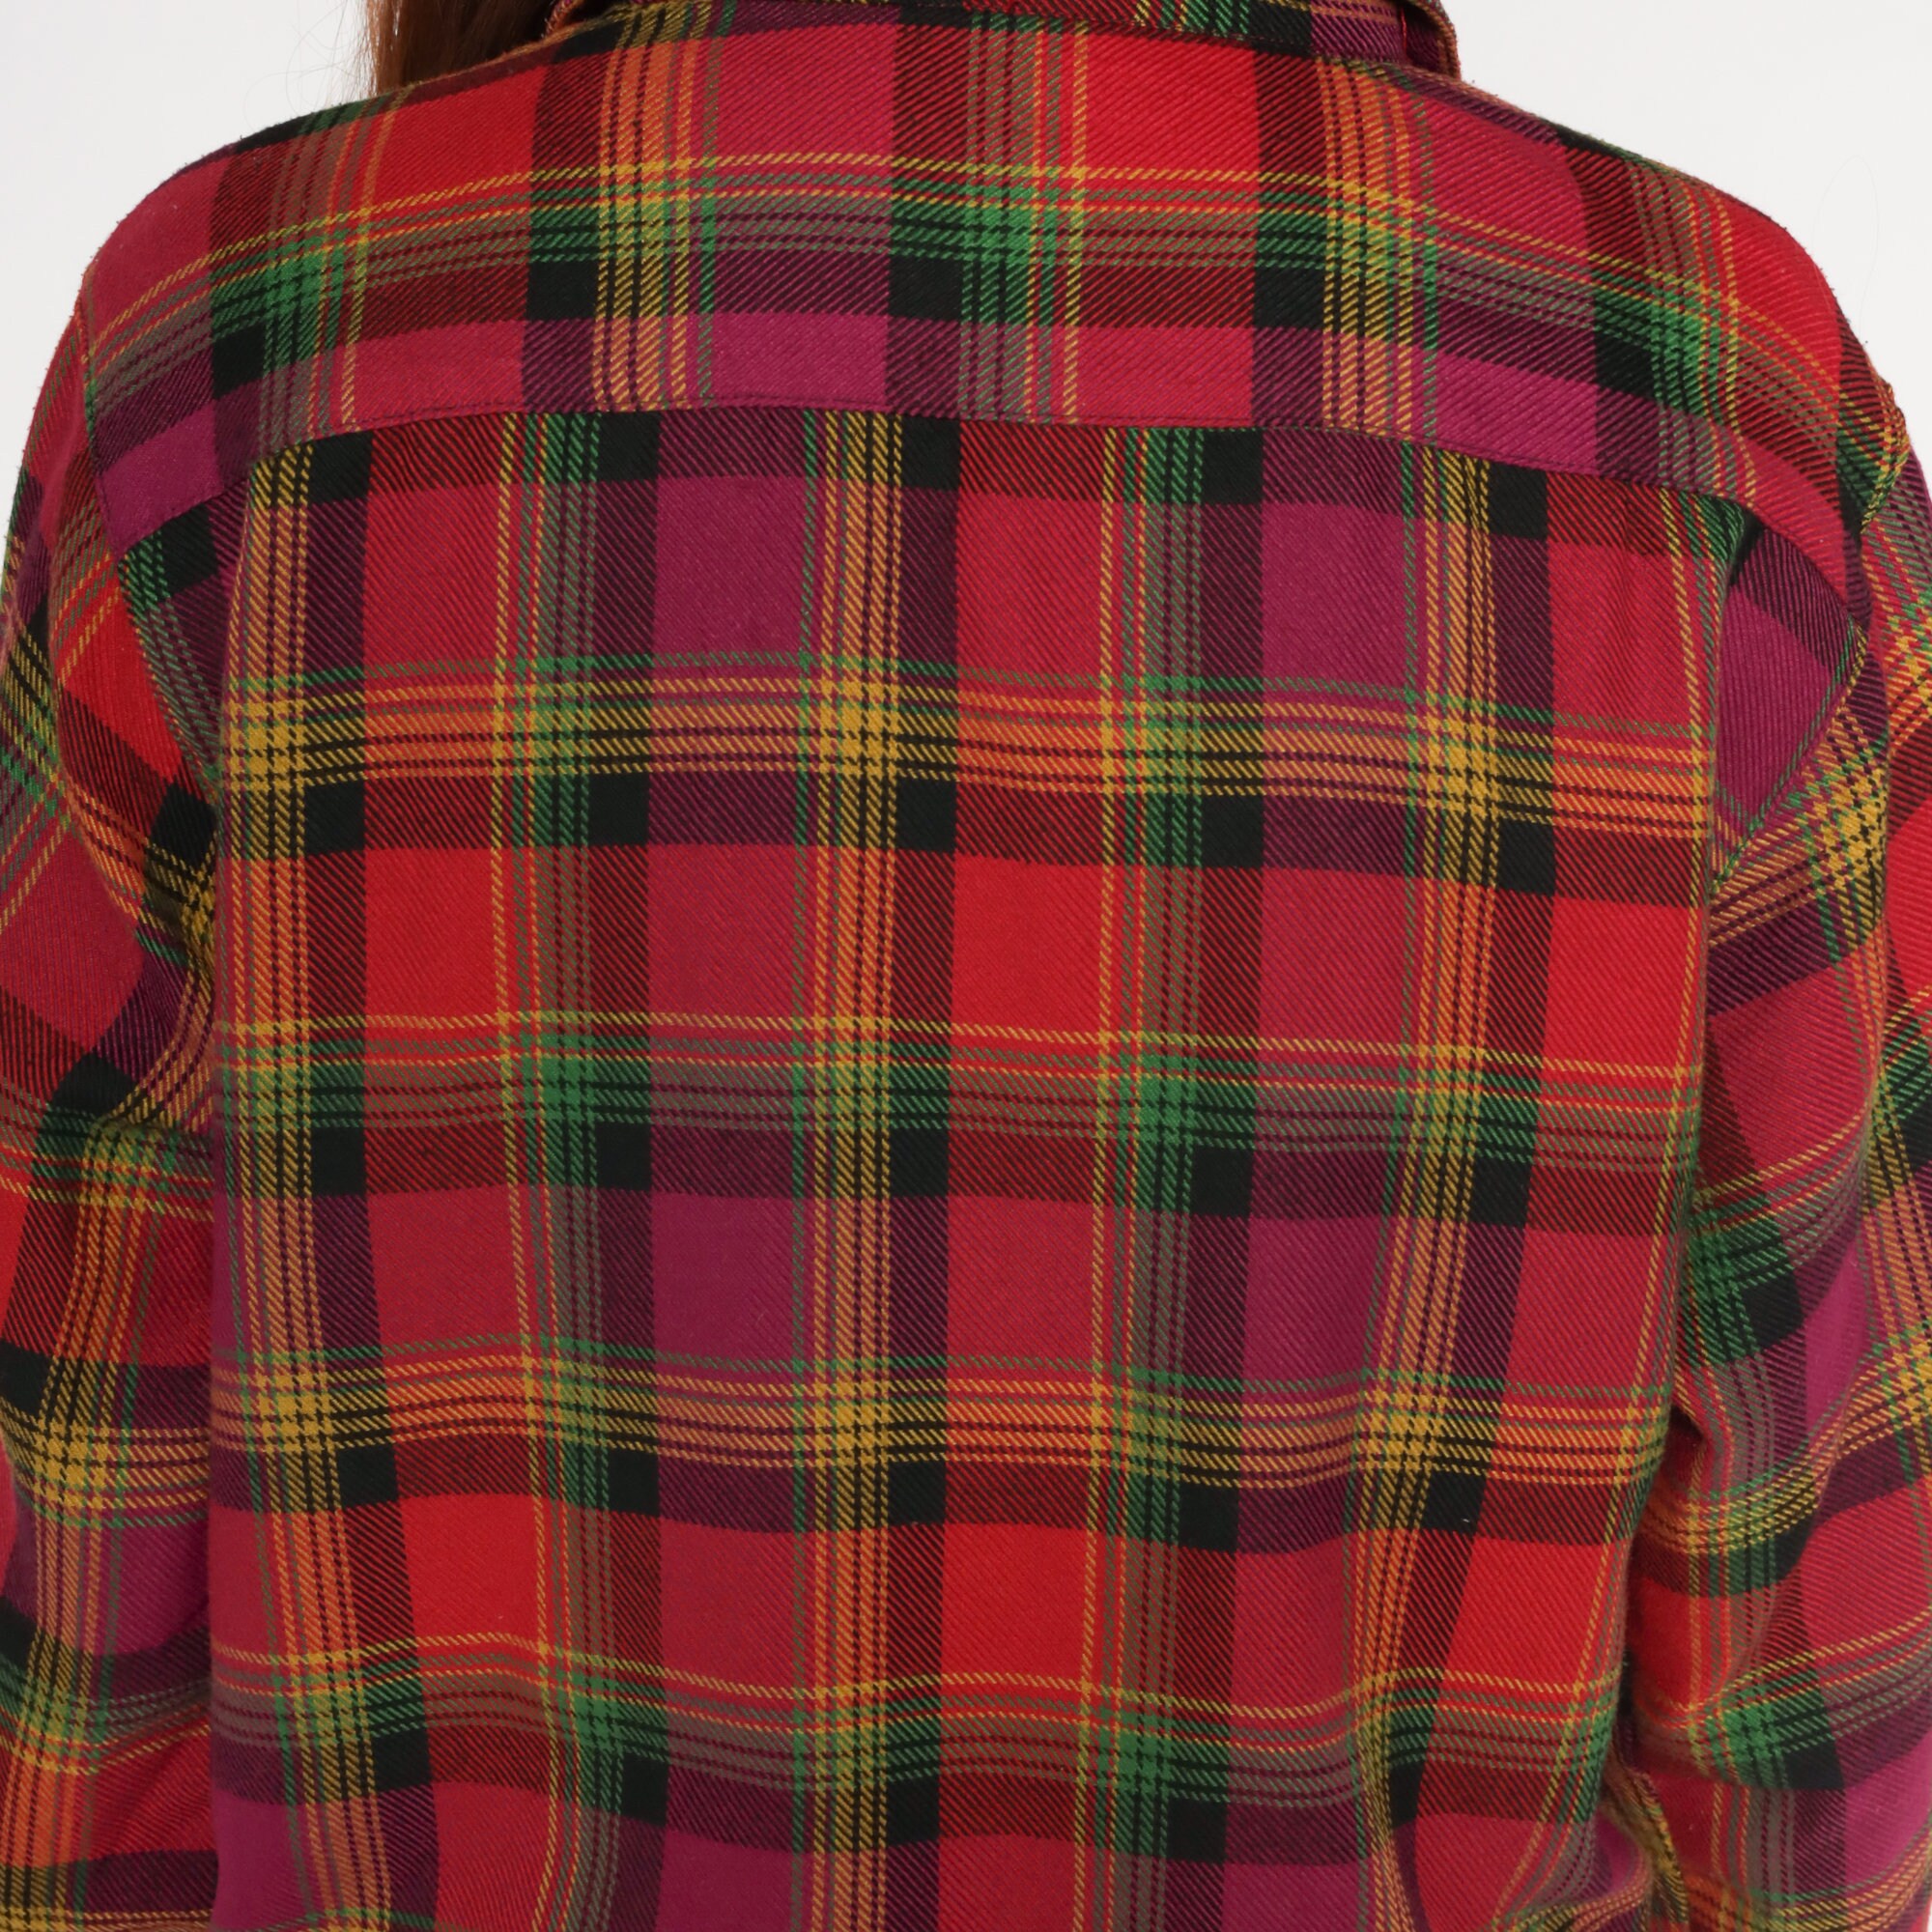 90s Flannel Shirt Red Plaid Button up Shirt Retro Checkered Grunge ...